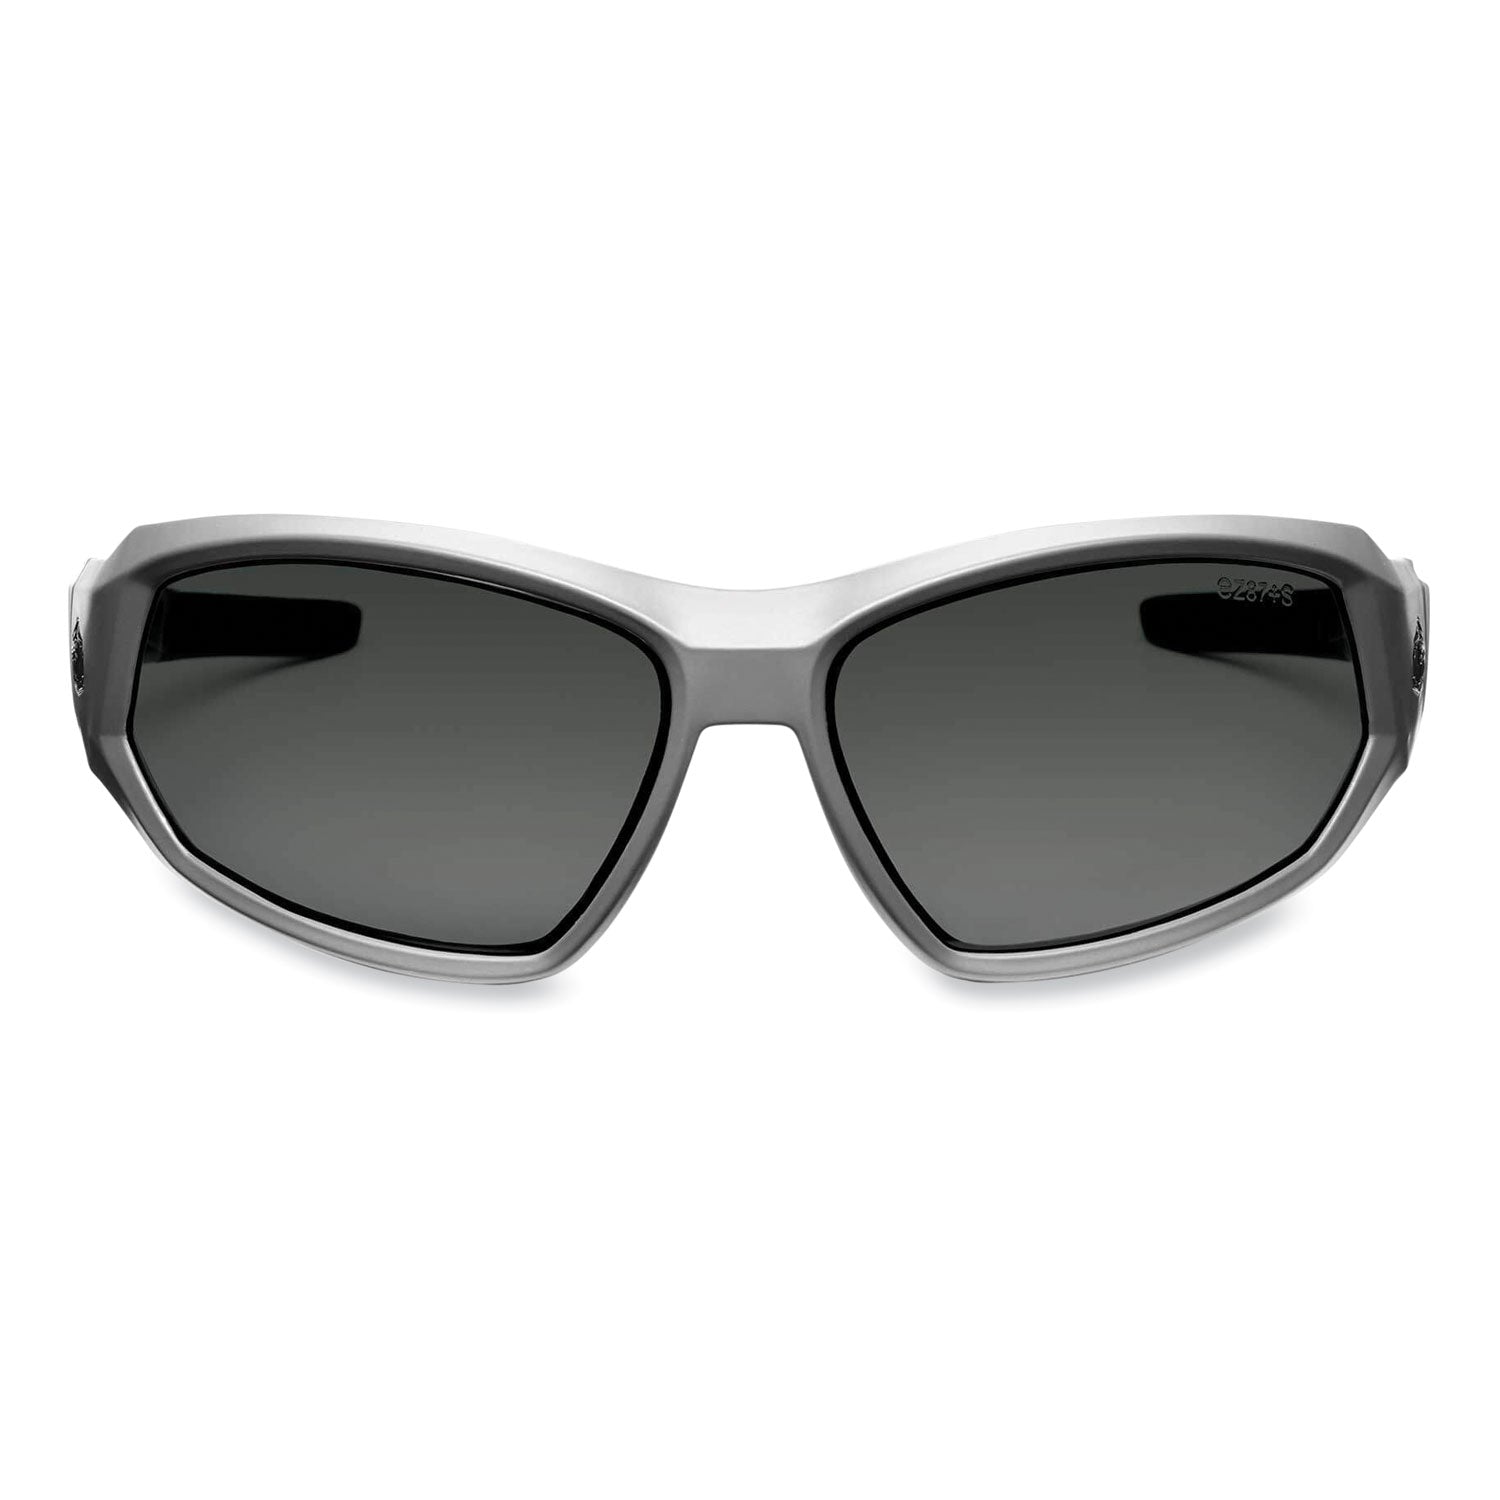 skullerz-loki-safety-glasses-goggles-matte-gray-nylon-impact-frame-polarized-smoke-polycarb-lensships-in-1-3-business-days_ego56131 - 3